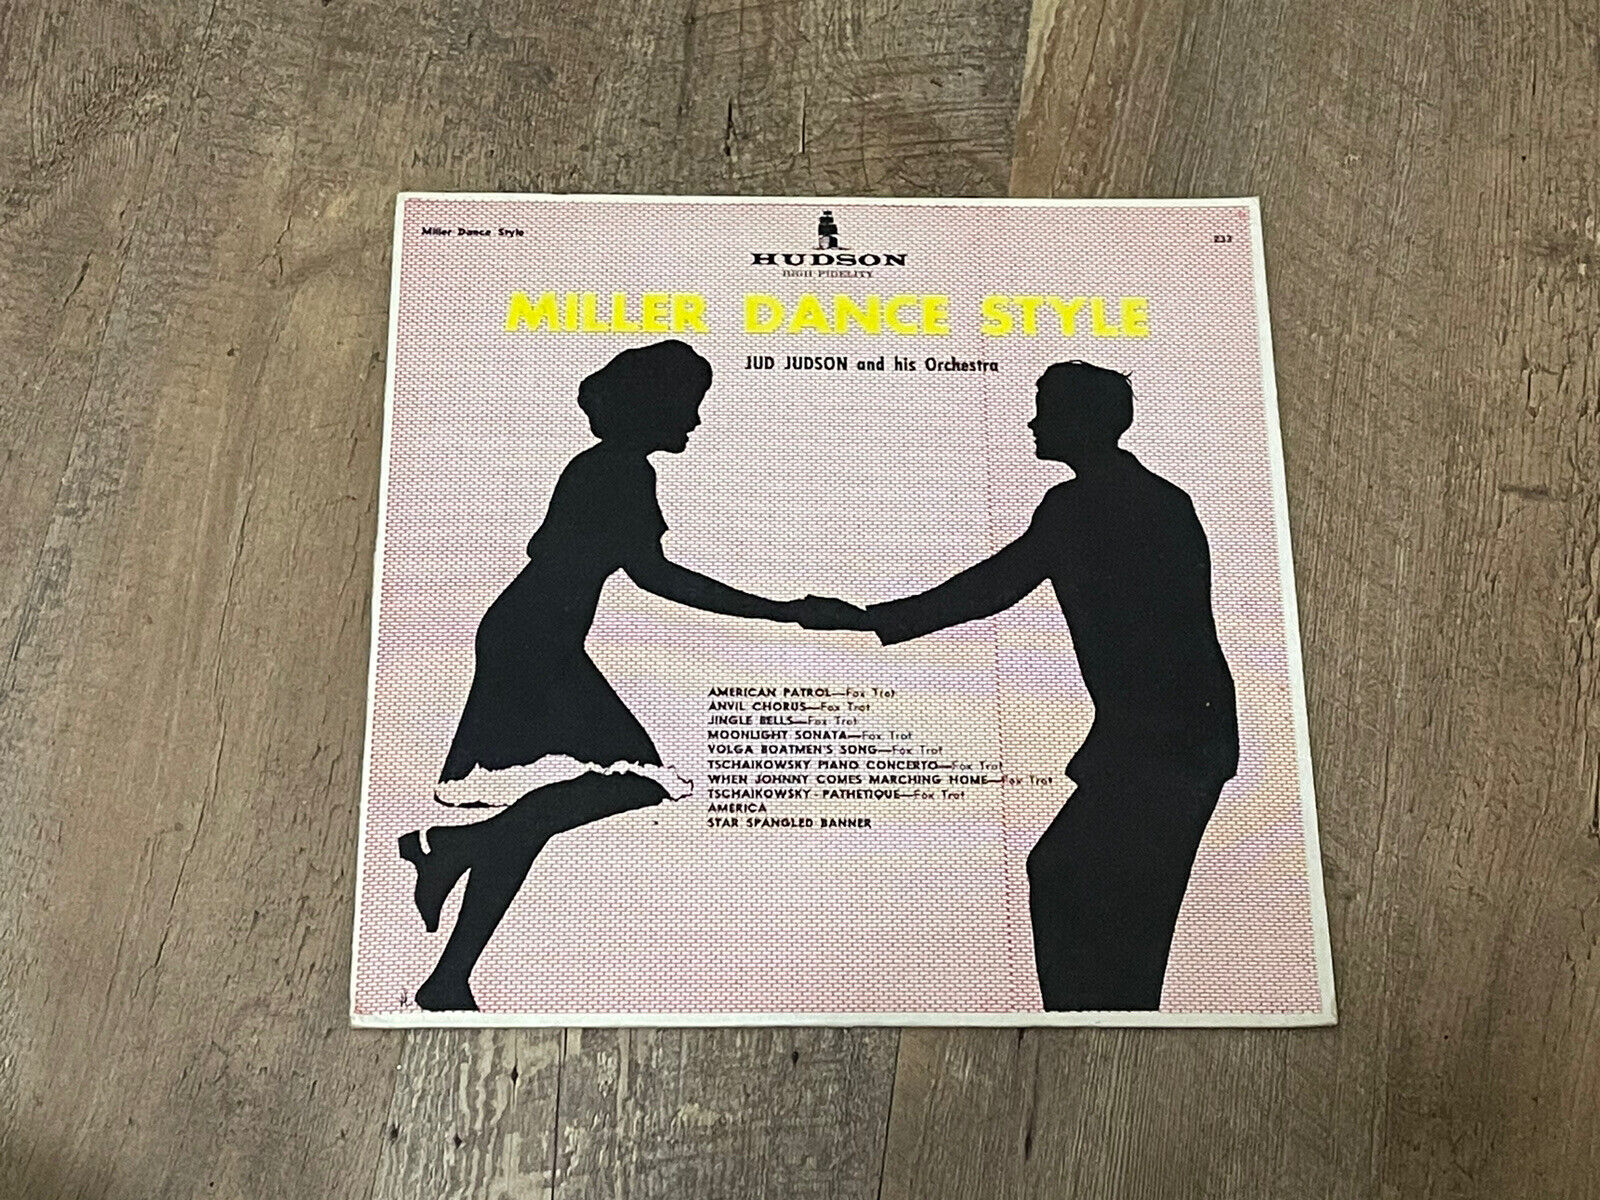 Miller Dance Style By Jud Judson & His Orchestra LP Vinyl 1960 Hudson G+/G+